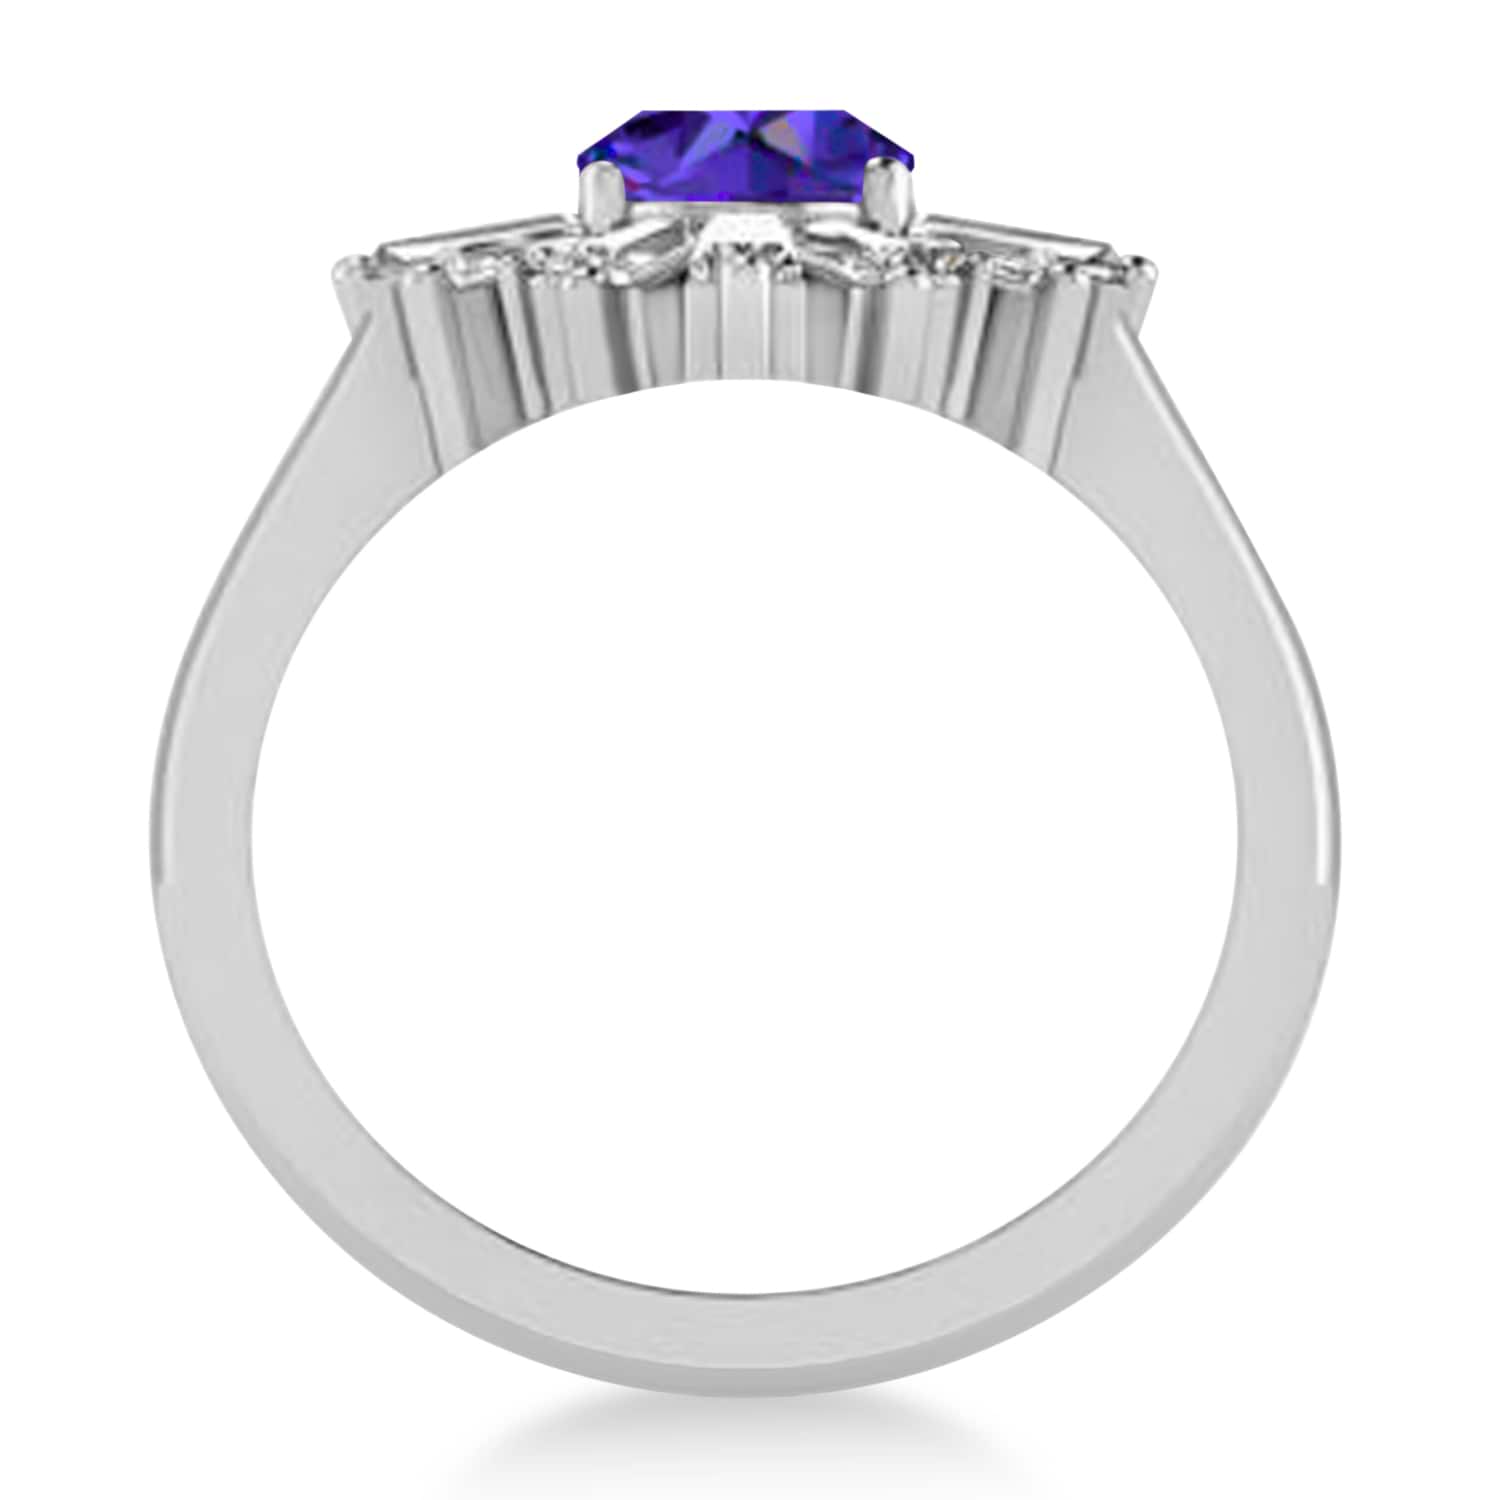 Tanzanite & Diamond Oval Cut Ballerina Engagement Ring 14k White Gold (3.06 ctw)